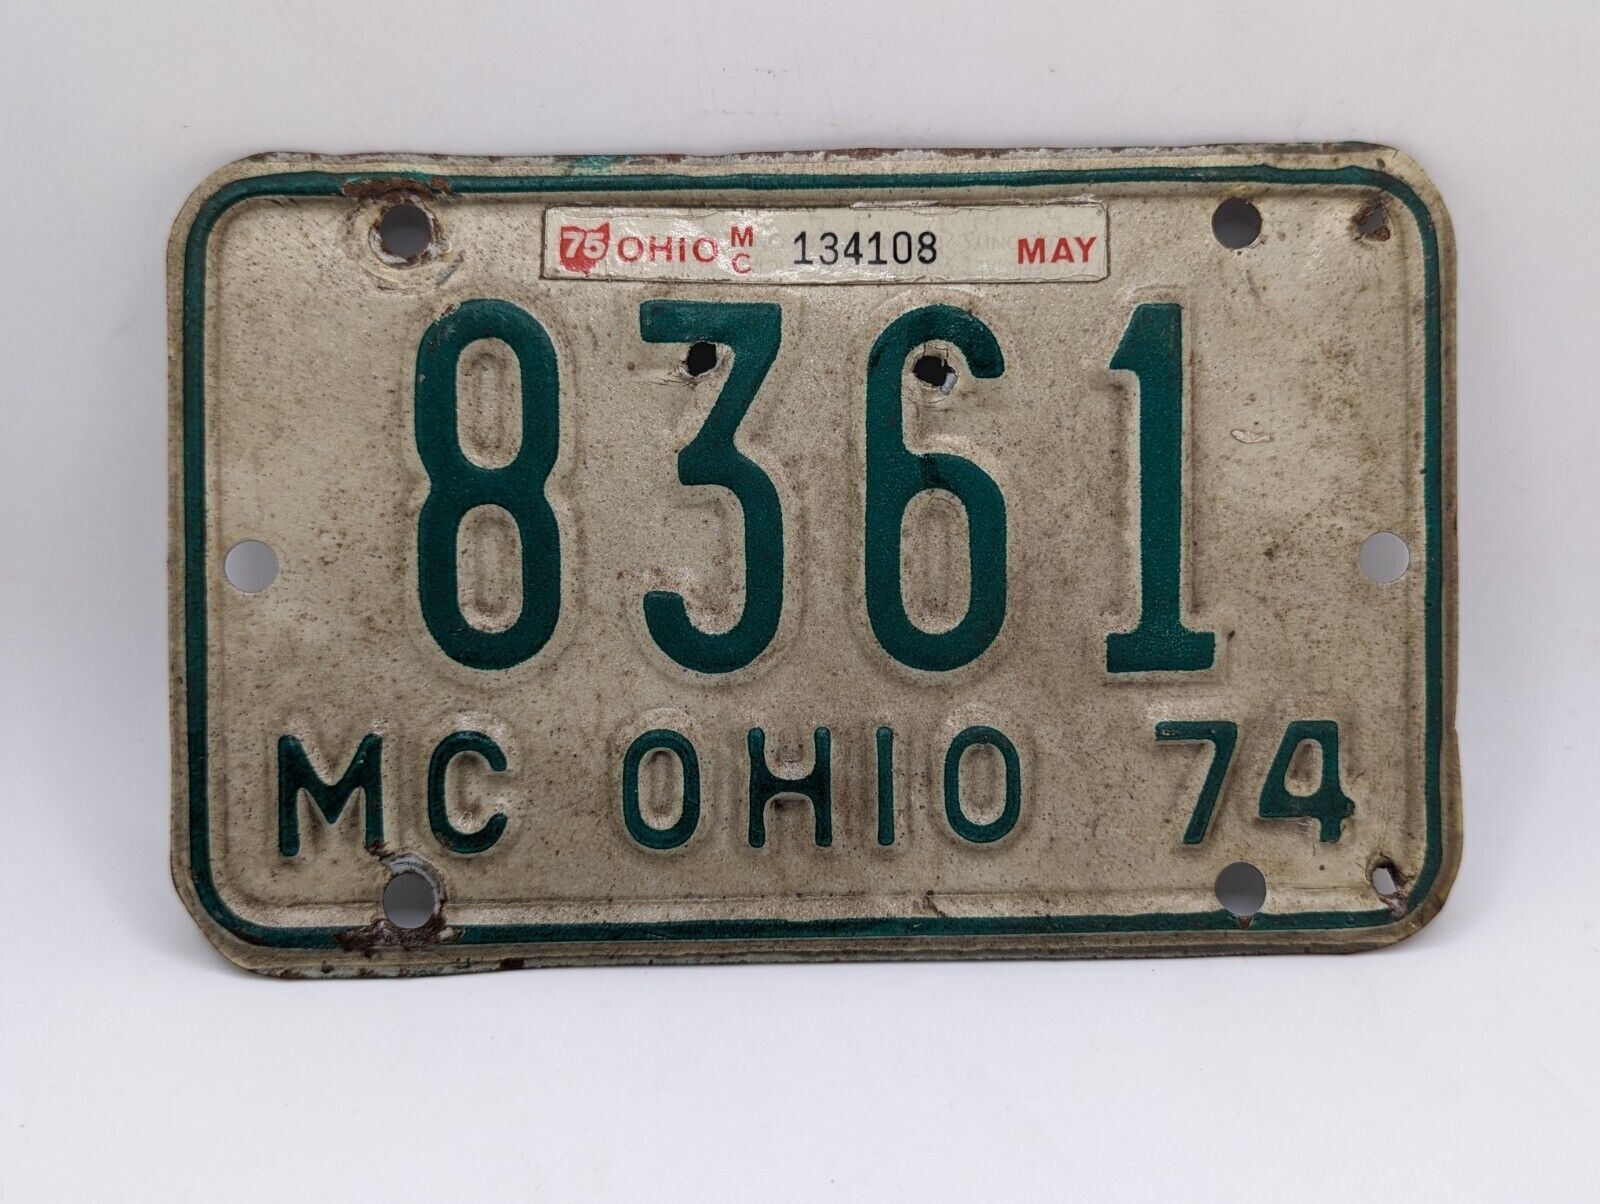 Vintage 1974 Ohio Motorcycle License Plate 8361 MC Americana